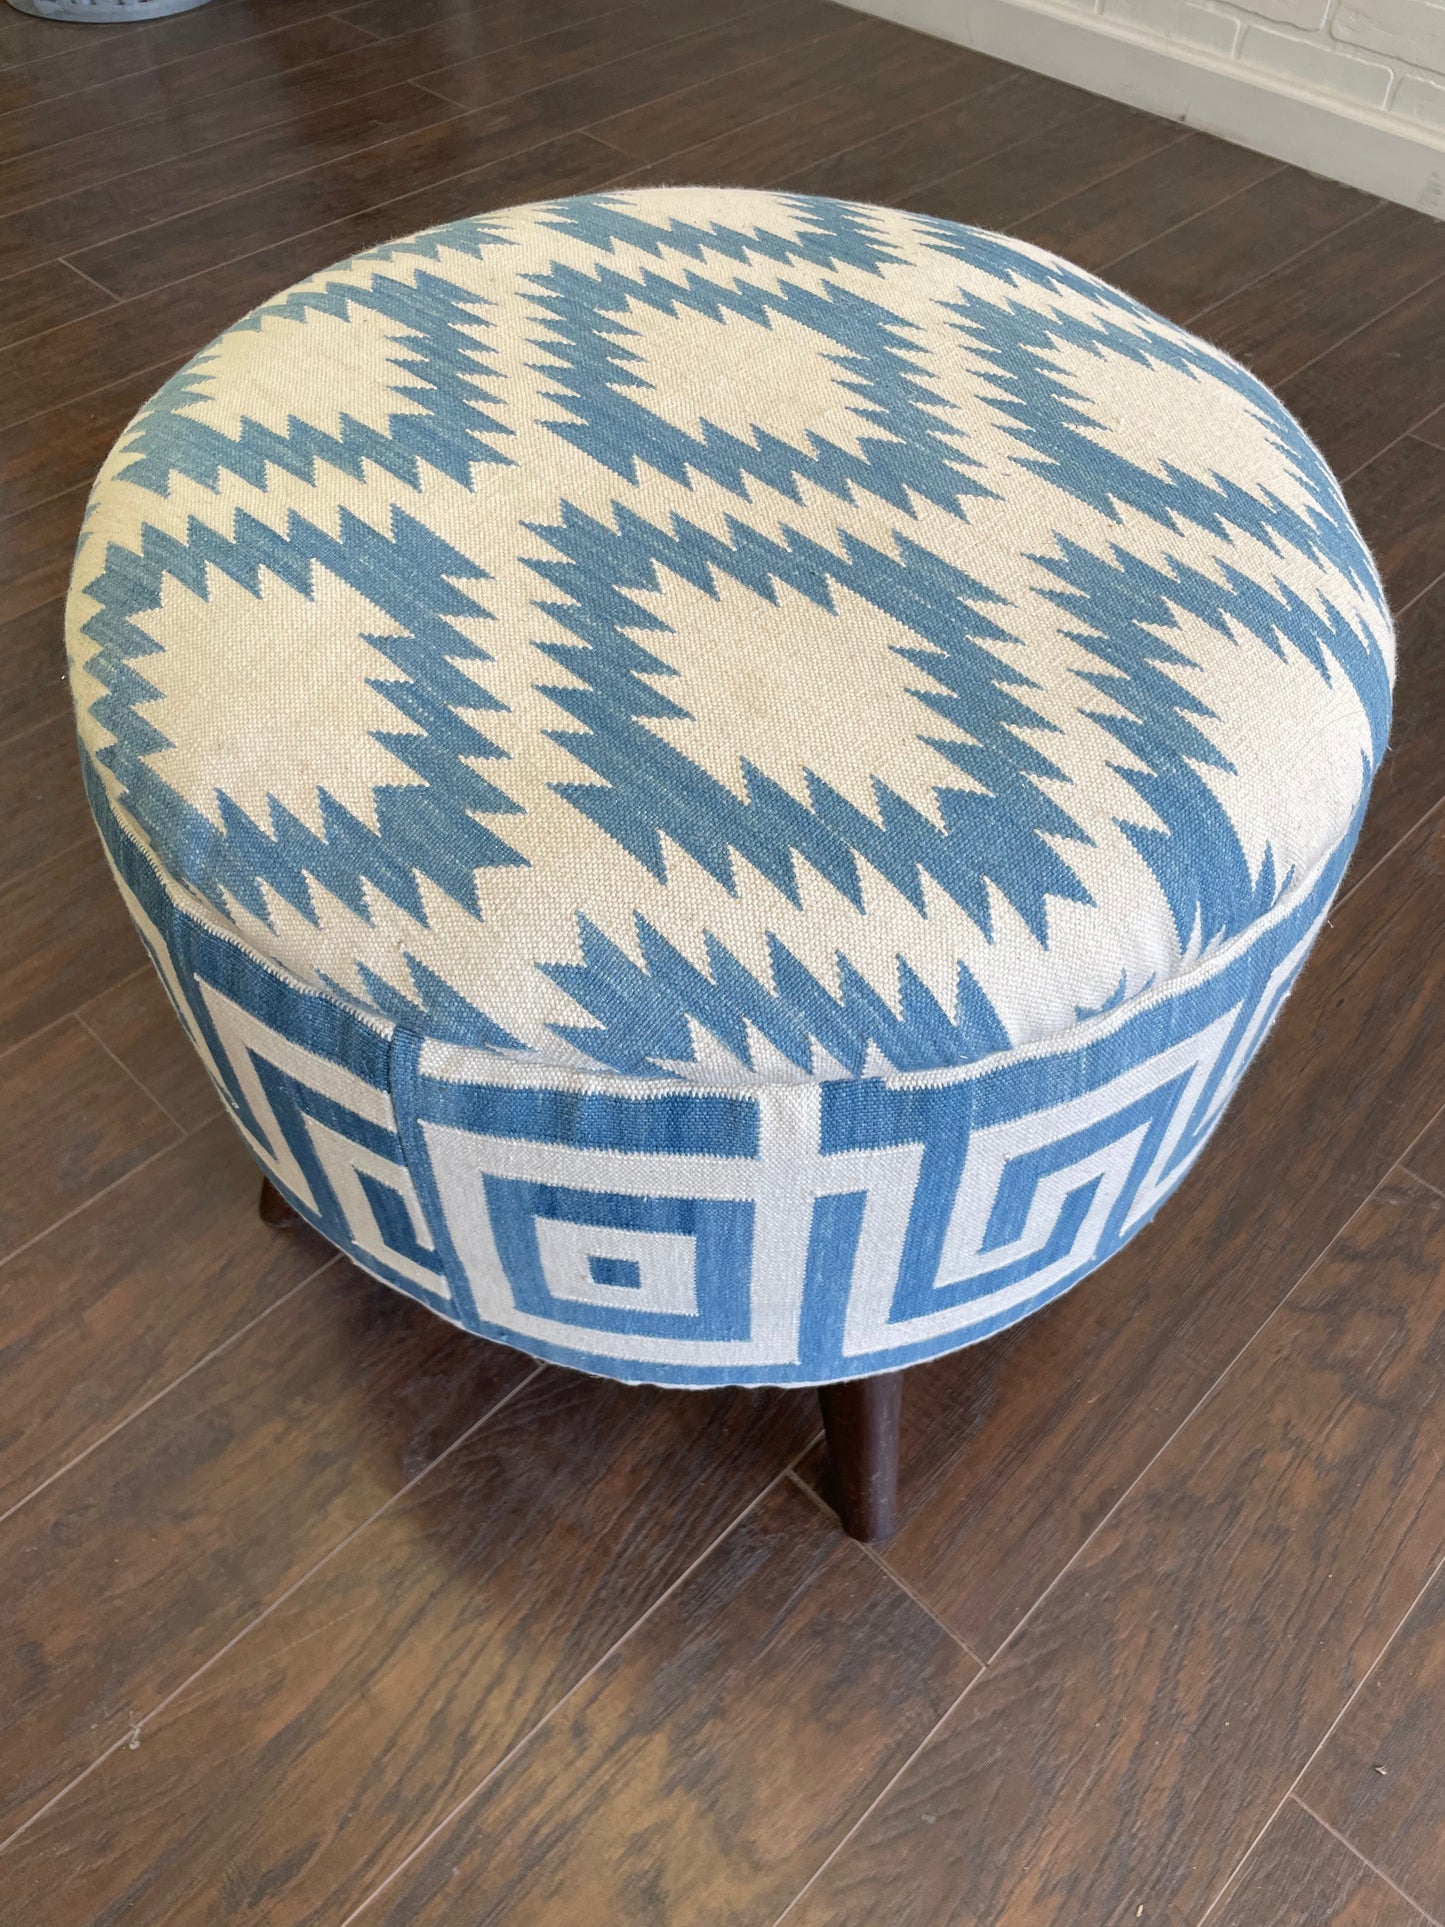 Round Turkish Upholstered Ottoman Modern Design - LG